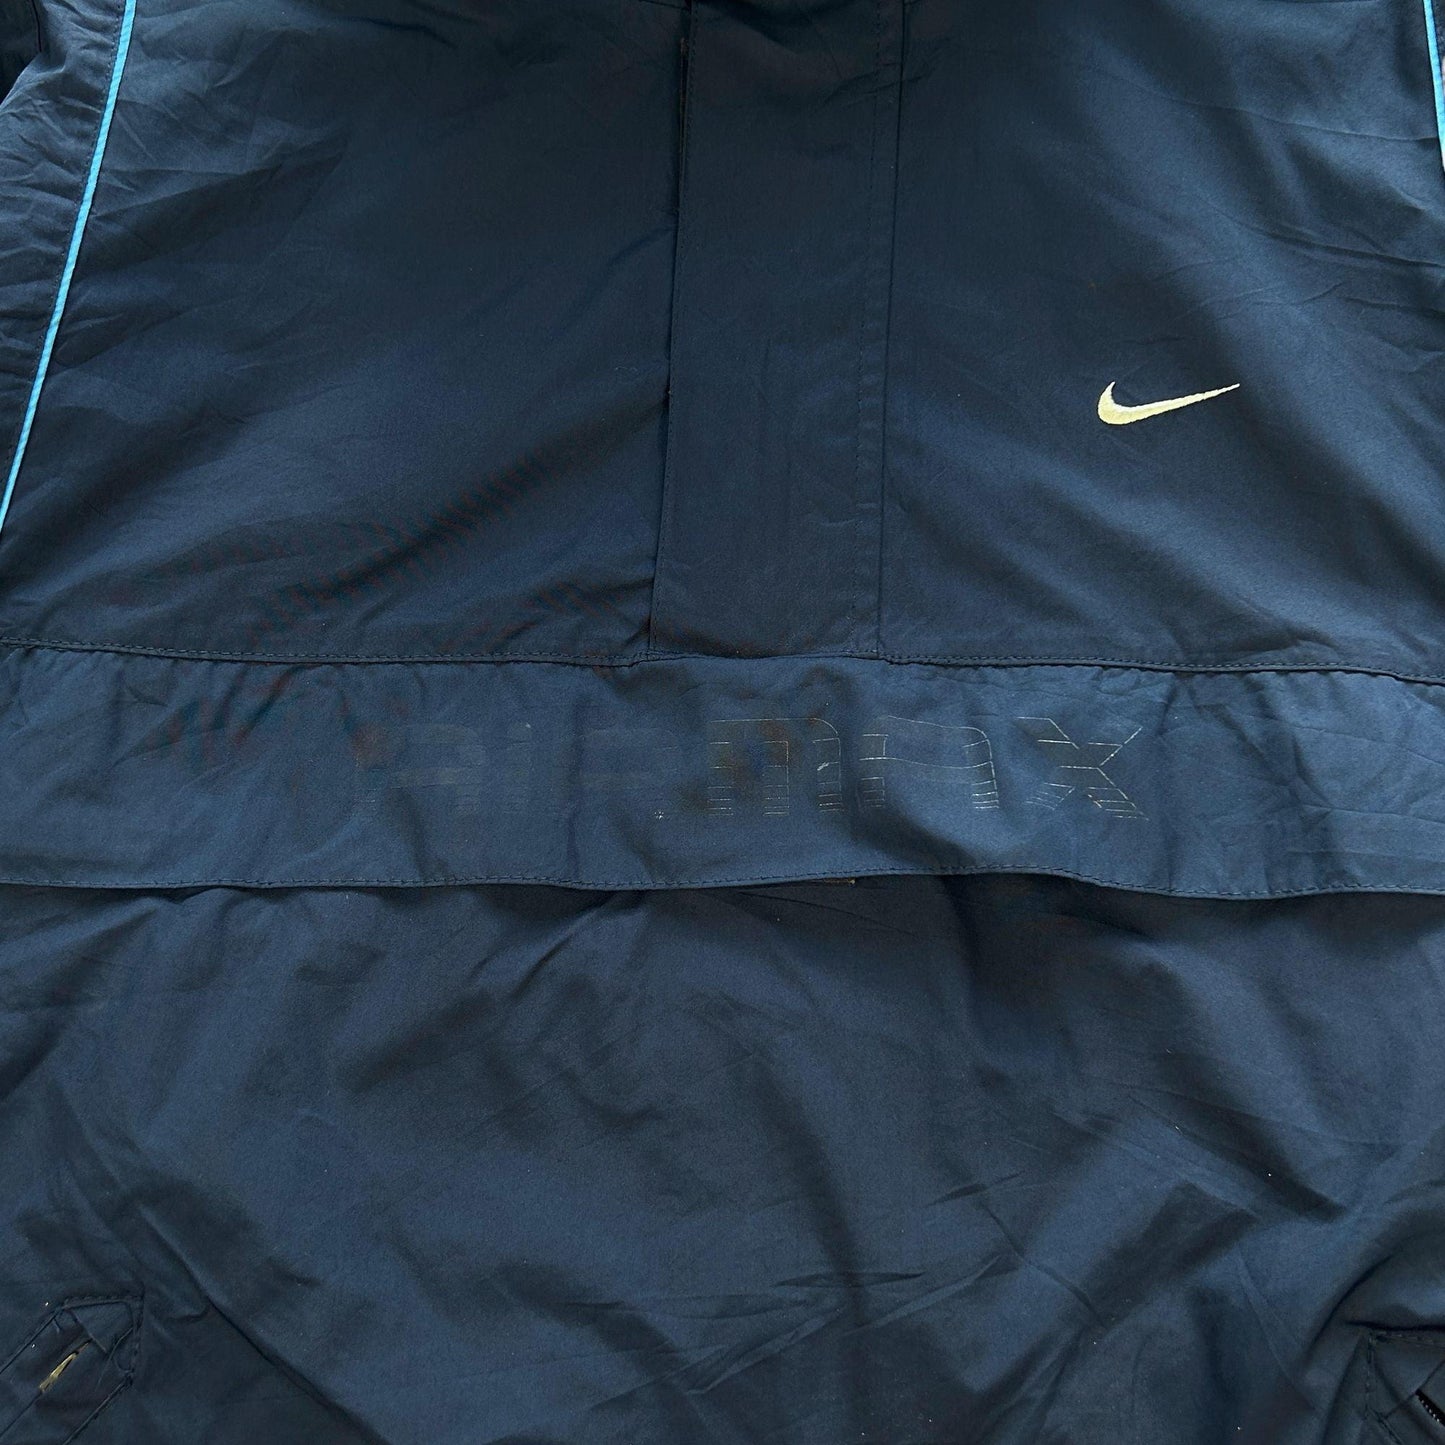 Vintage Nike Q Zip Jacket Size M - Known Source